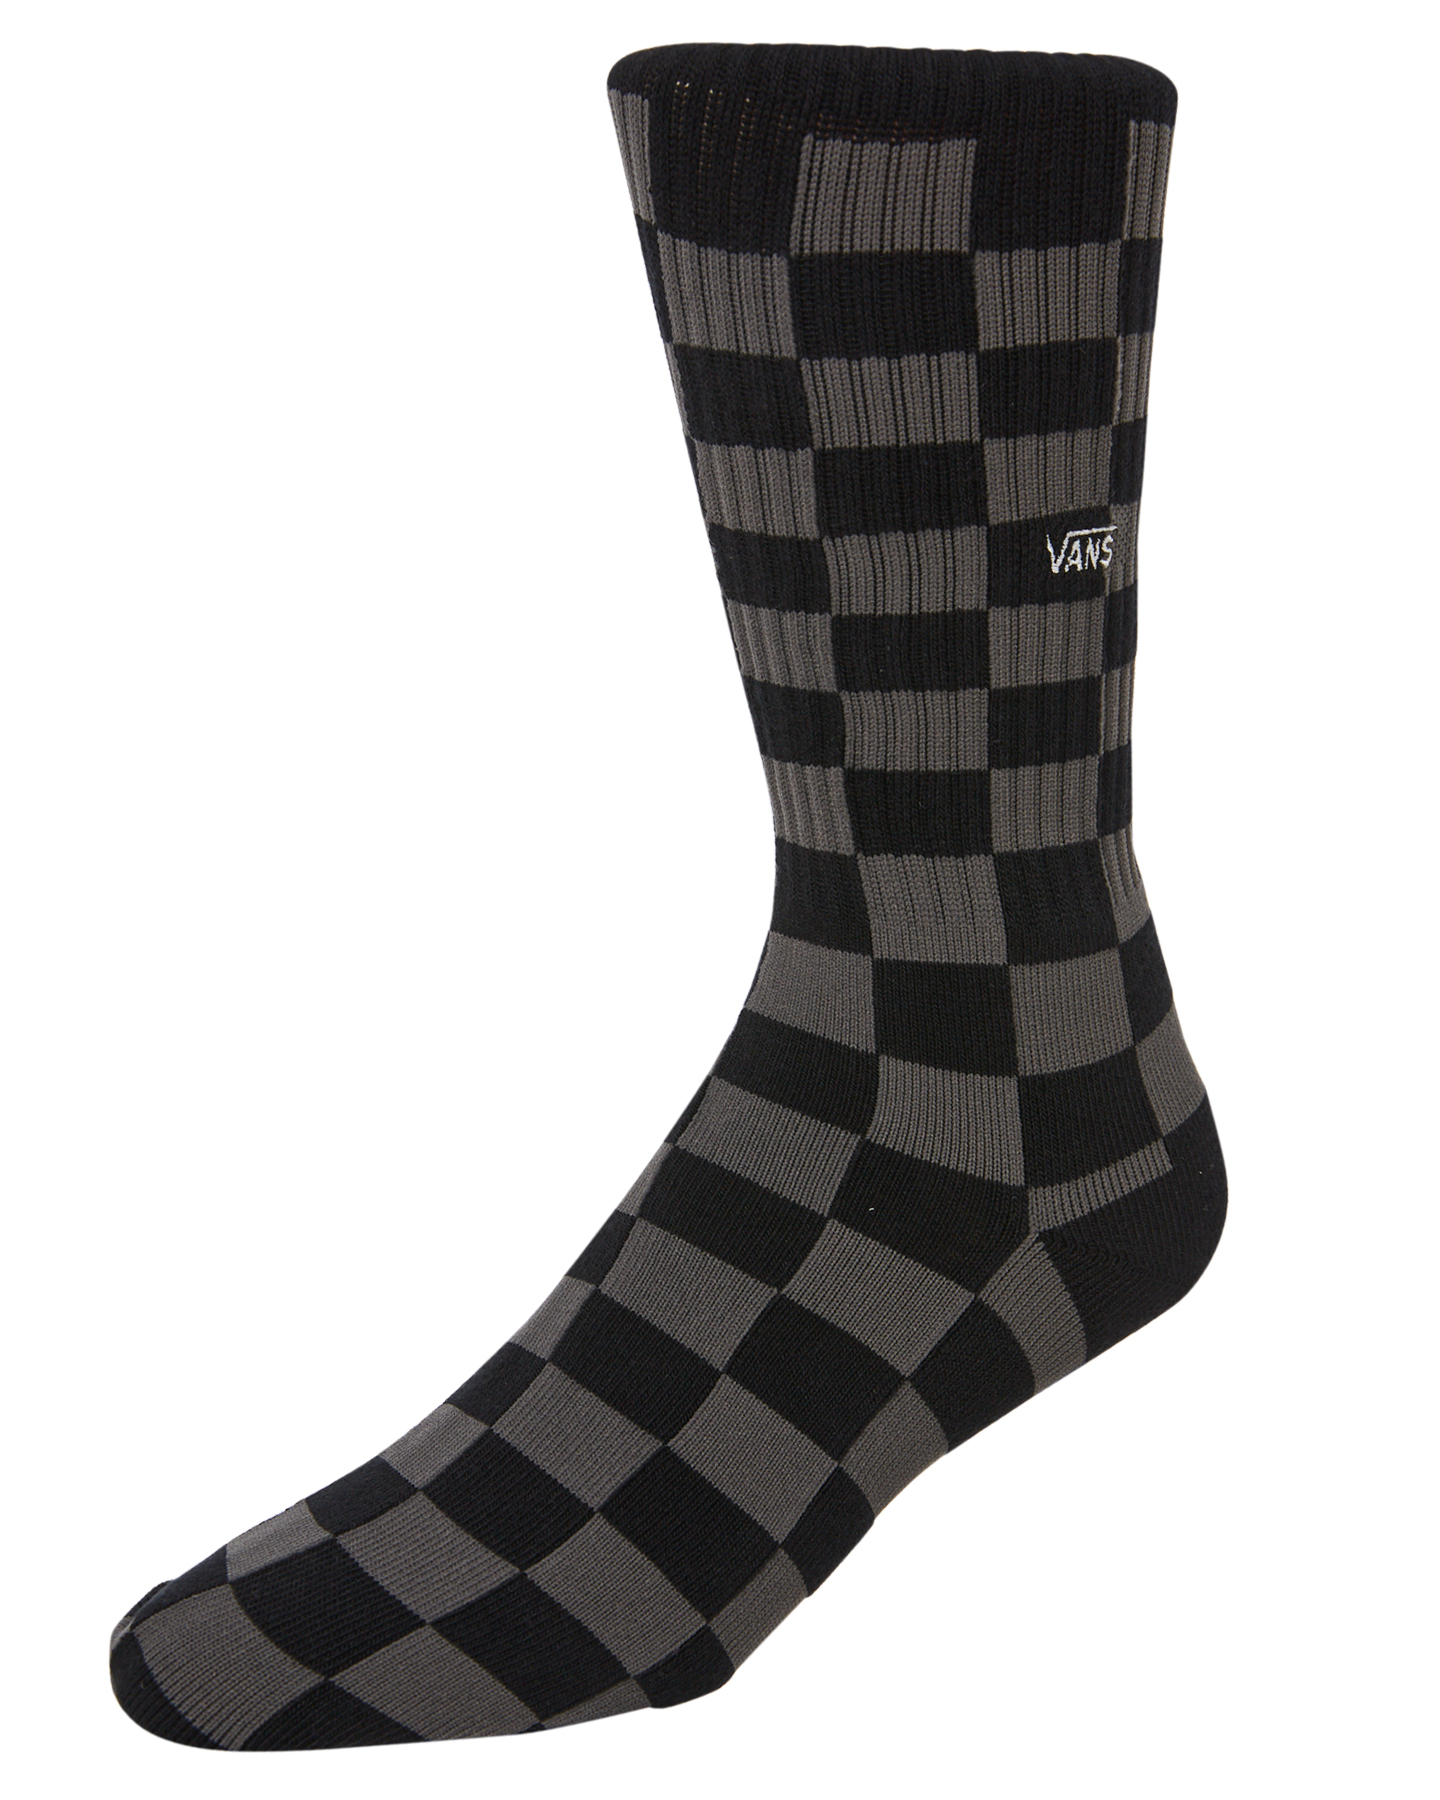 Vans Checkerboard Ii Mens Sock - Black Charcoal | SurfStitch